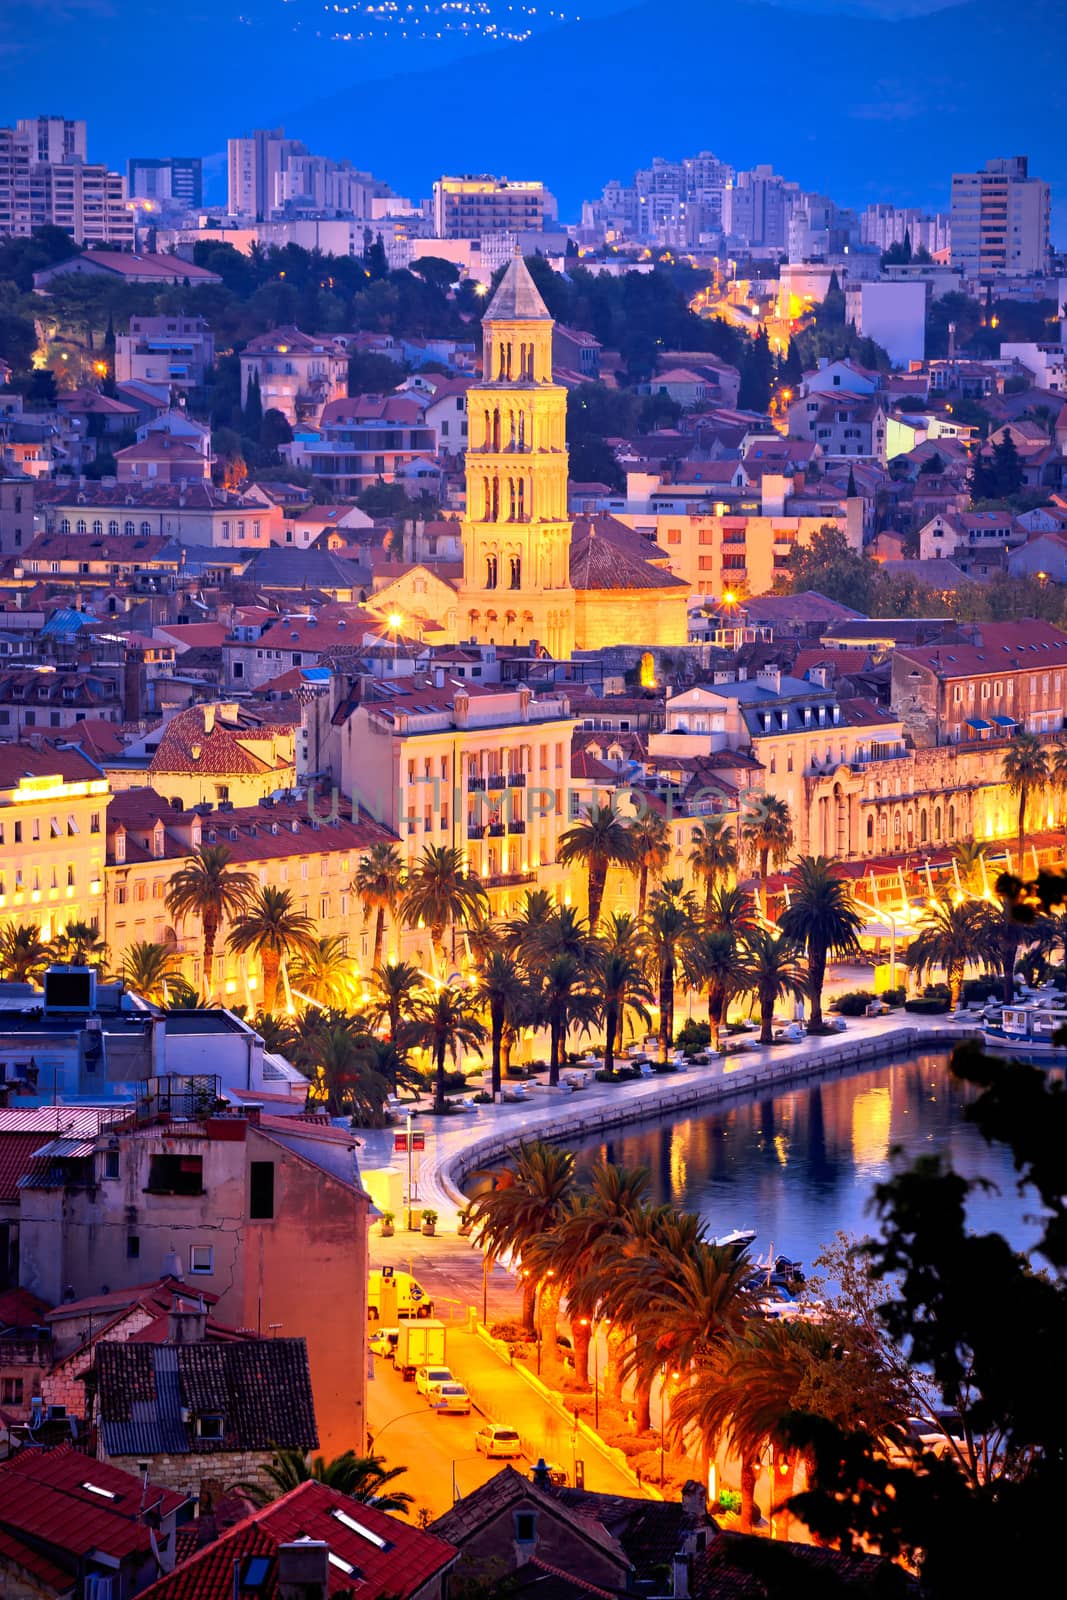 Famous Split waterfront evening aerial view, city in Dalmatia, Croatia